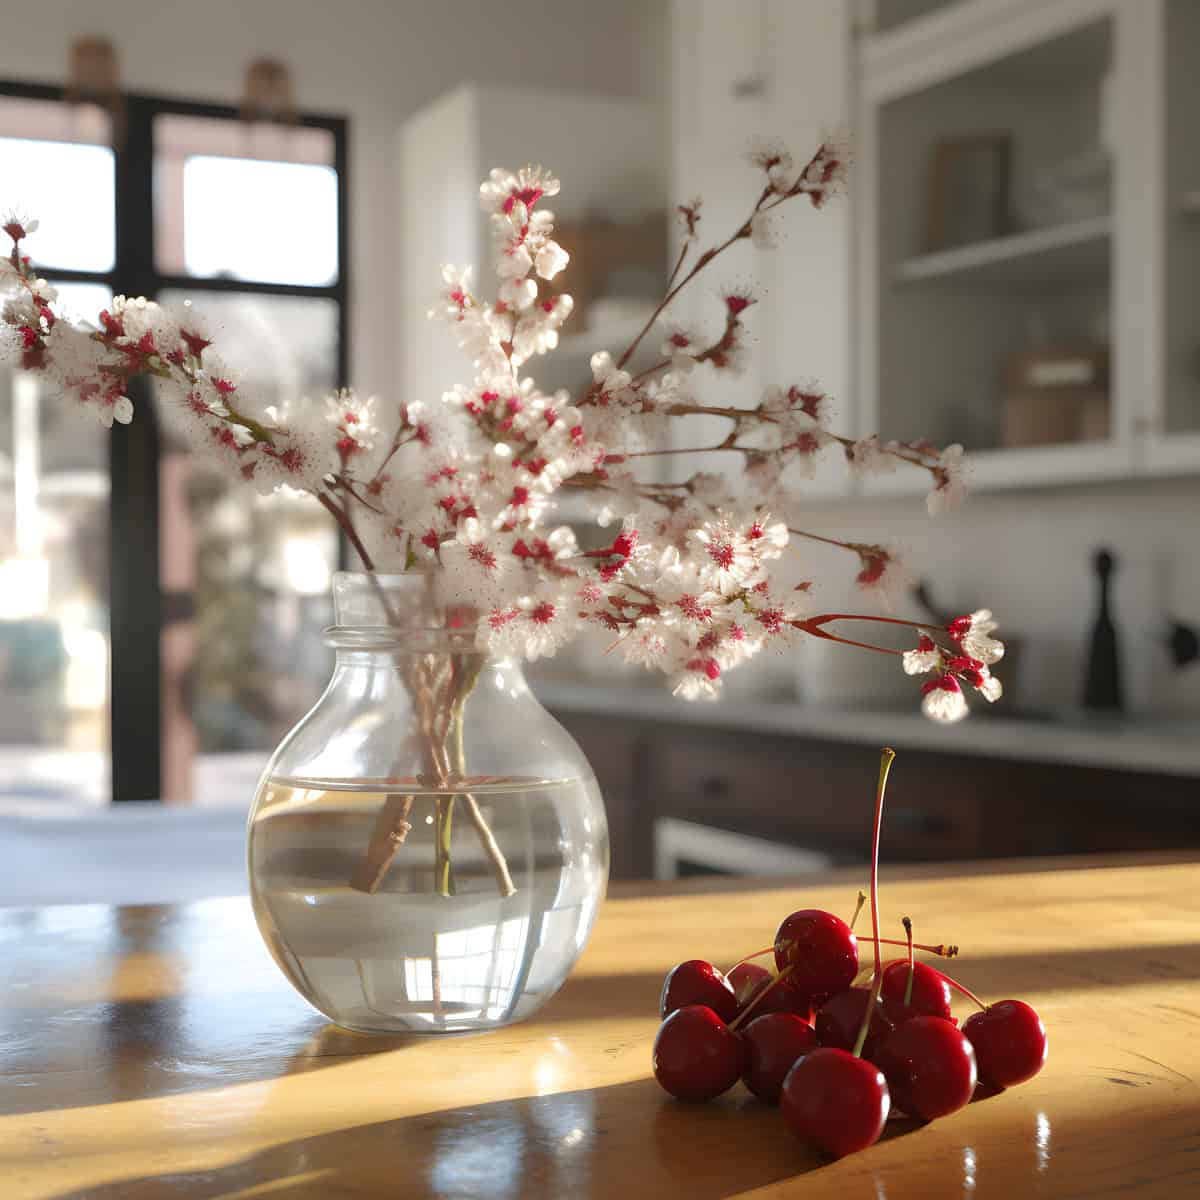 Sand Cherries on a kitchen counter